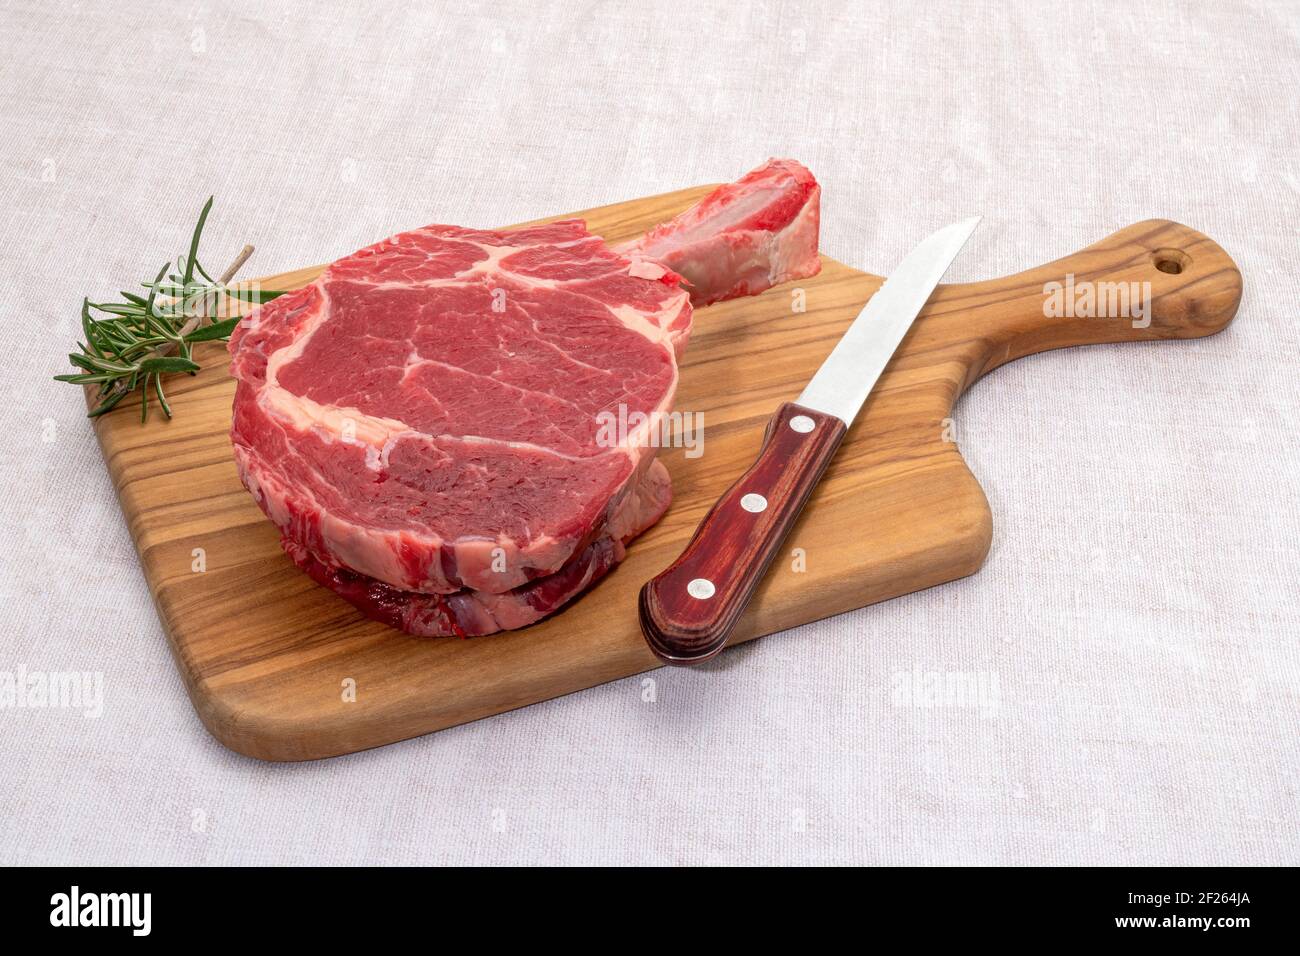 A raw rib eye tomahawk steak on a wooden cutting board Stock Photo